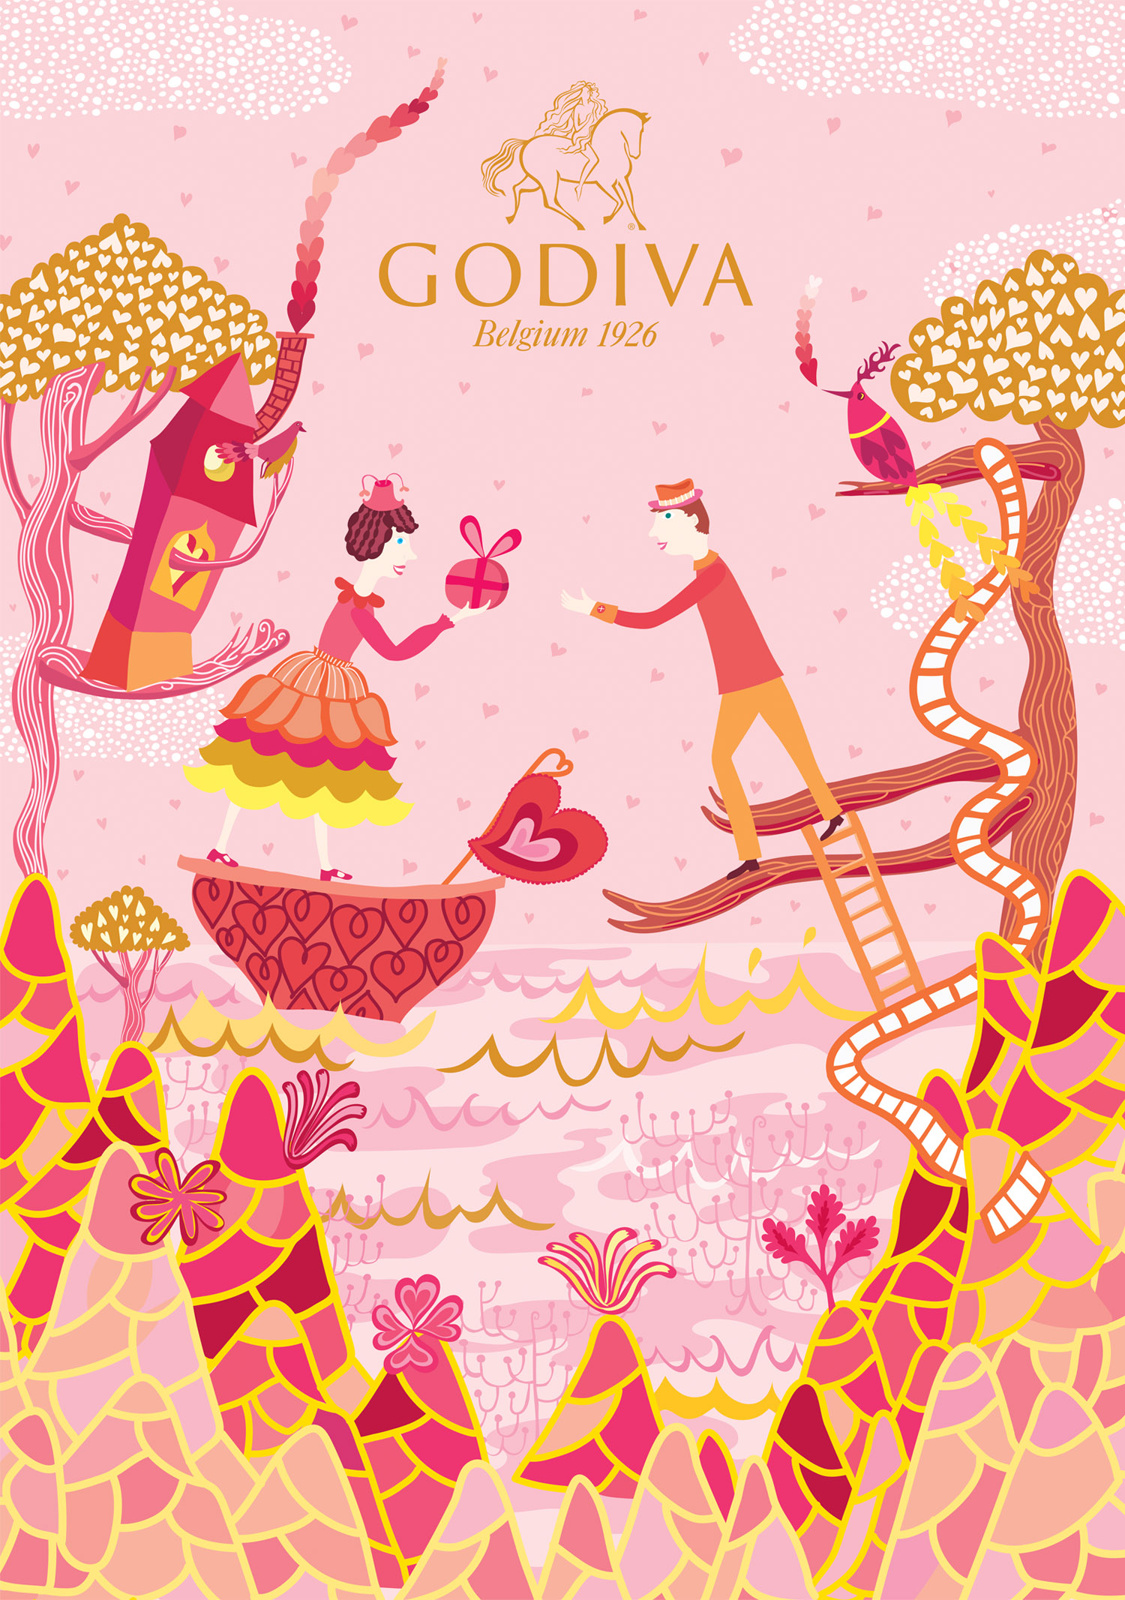 Godiva Valentine's Day & White Day Packaging